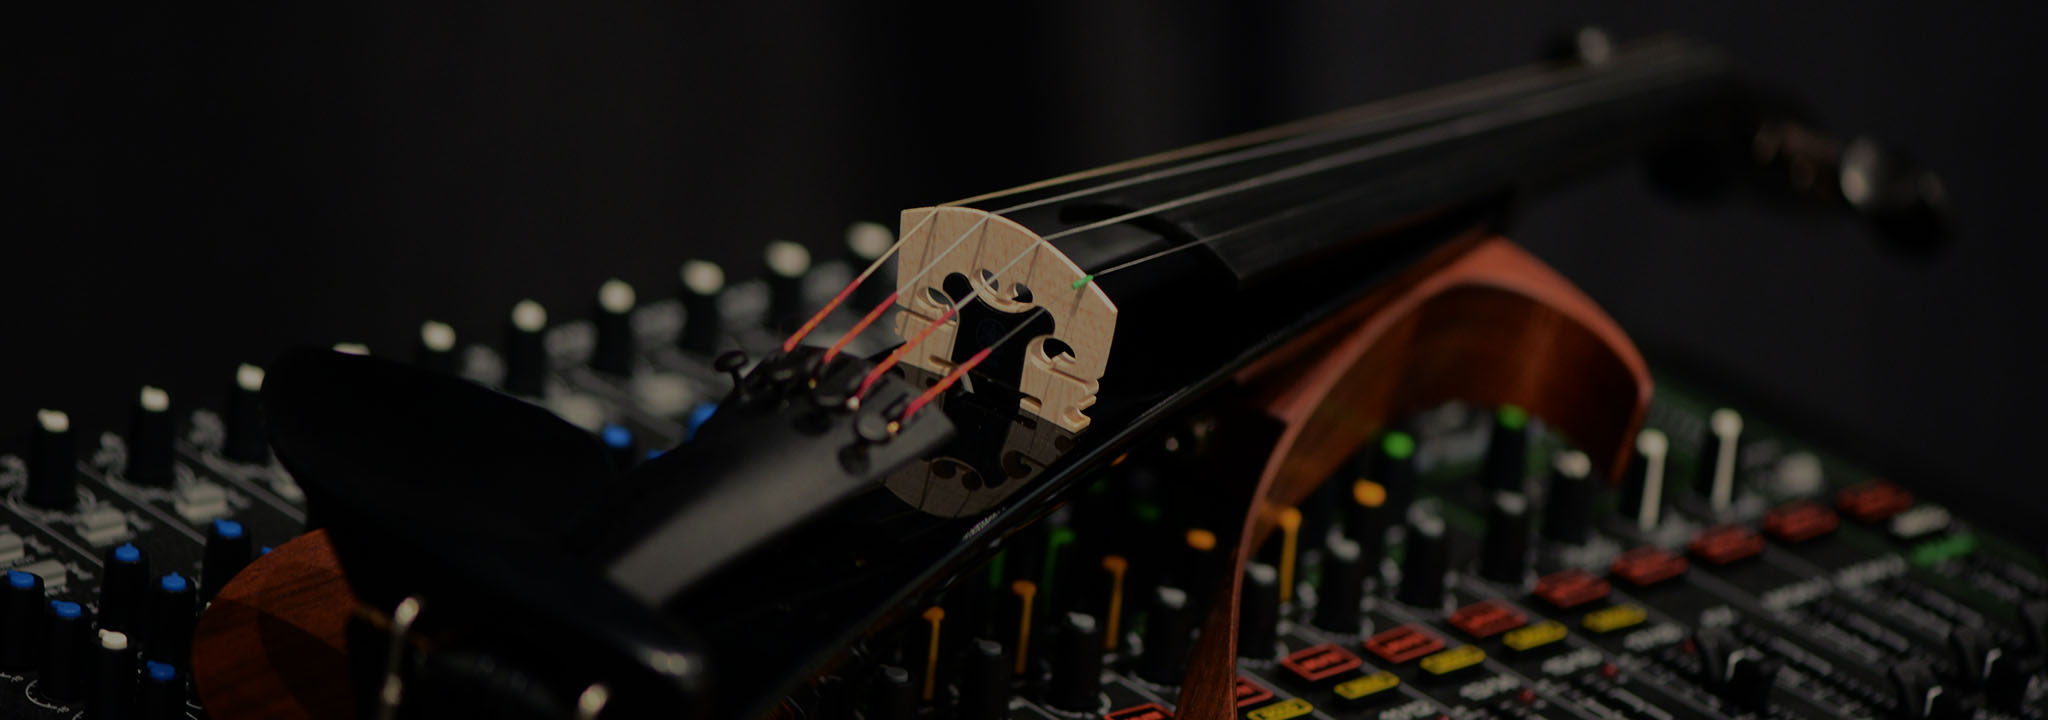 Close up photo of a Yamaha YEV Electric violin